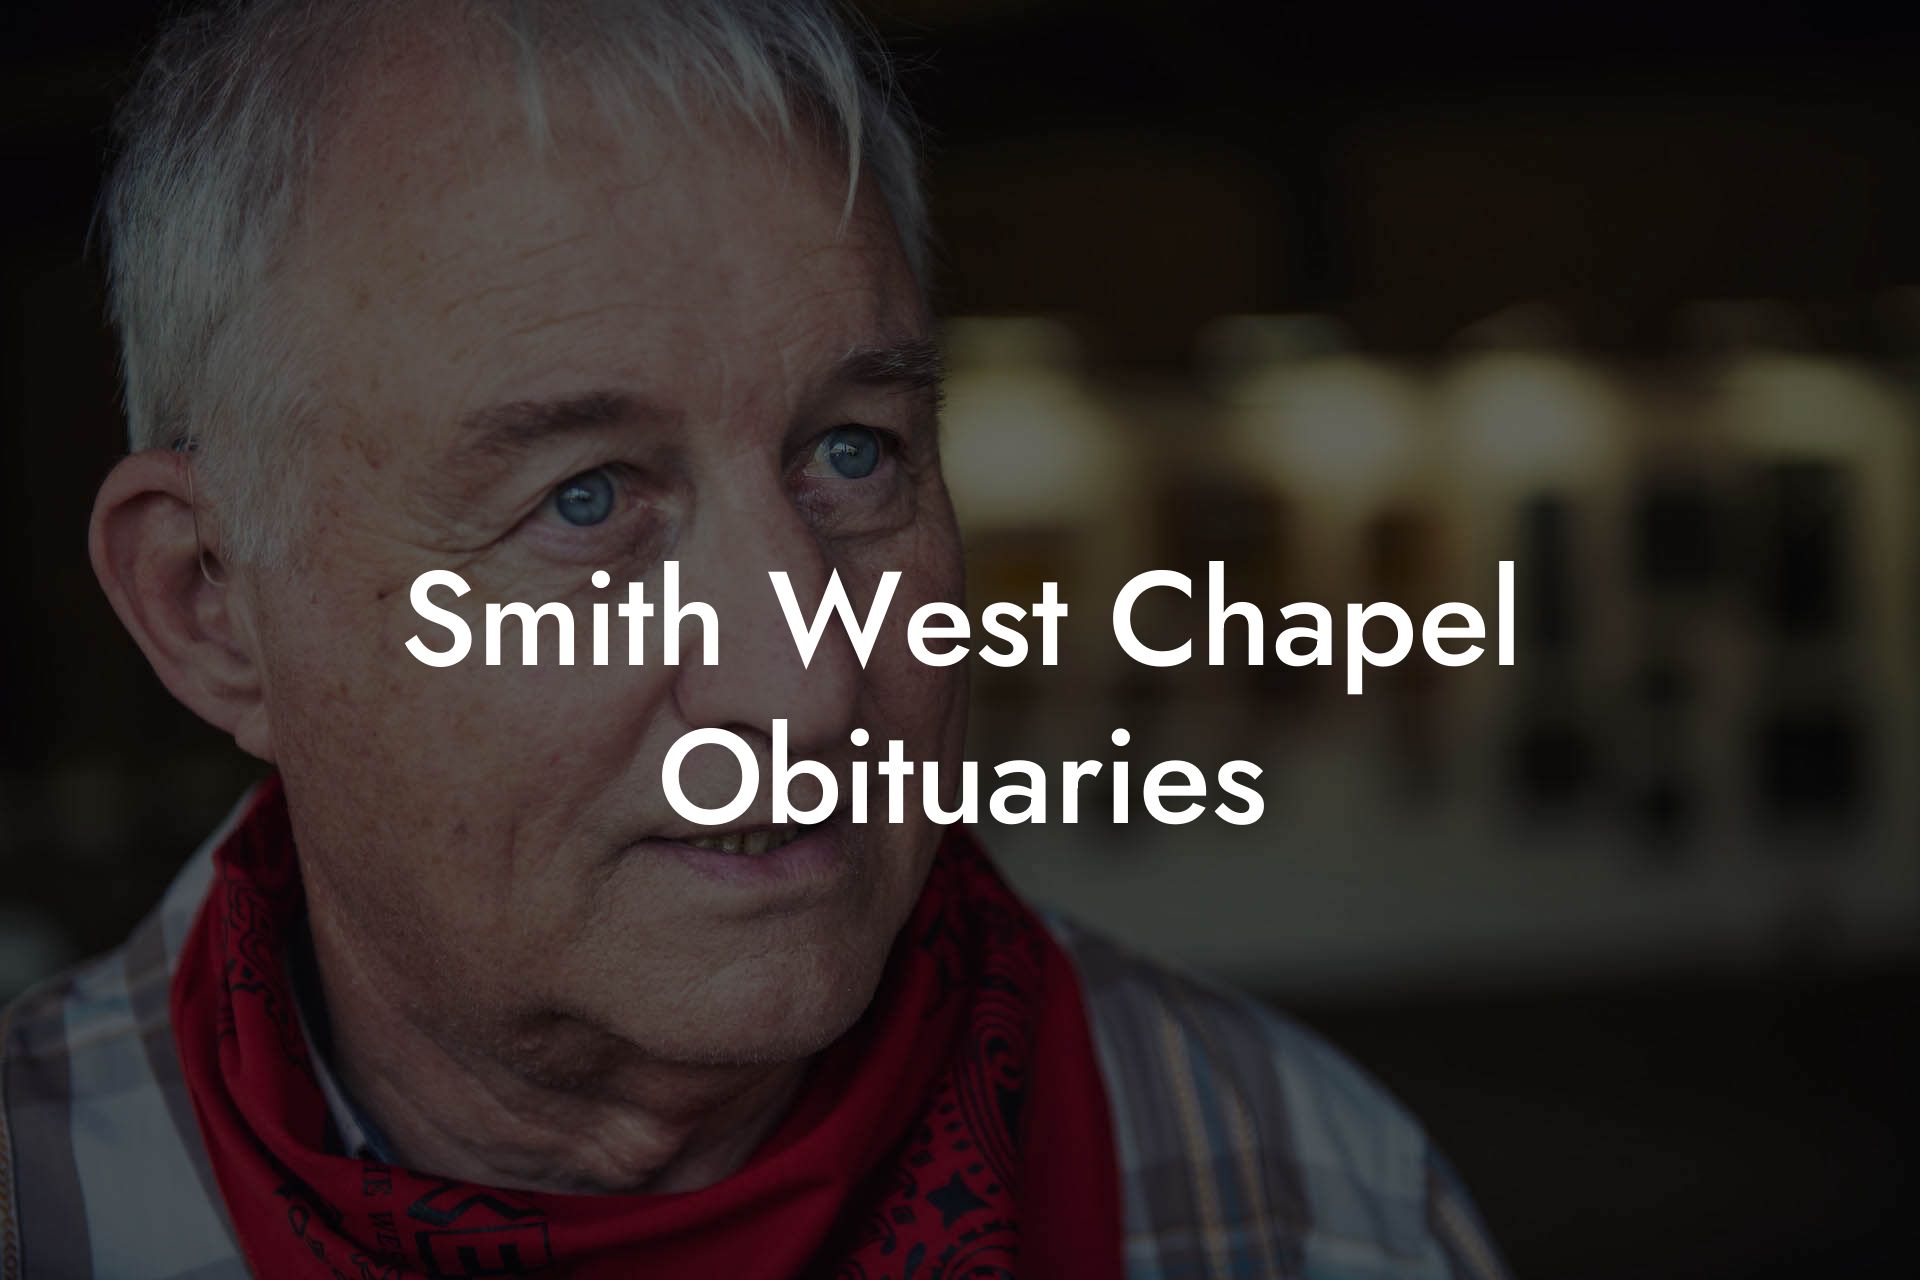 Smith West Chapel Obituaries